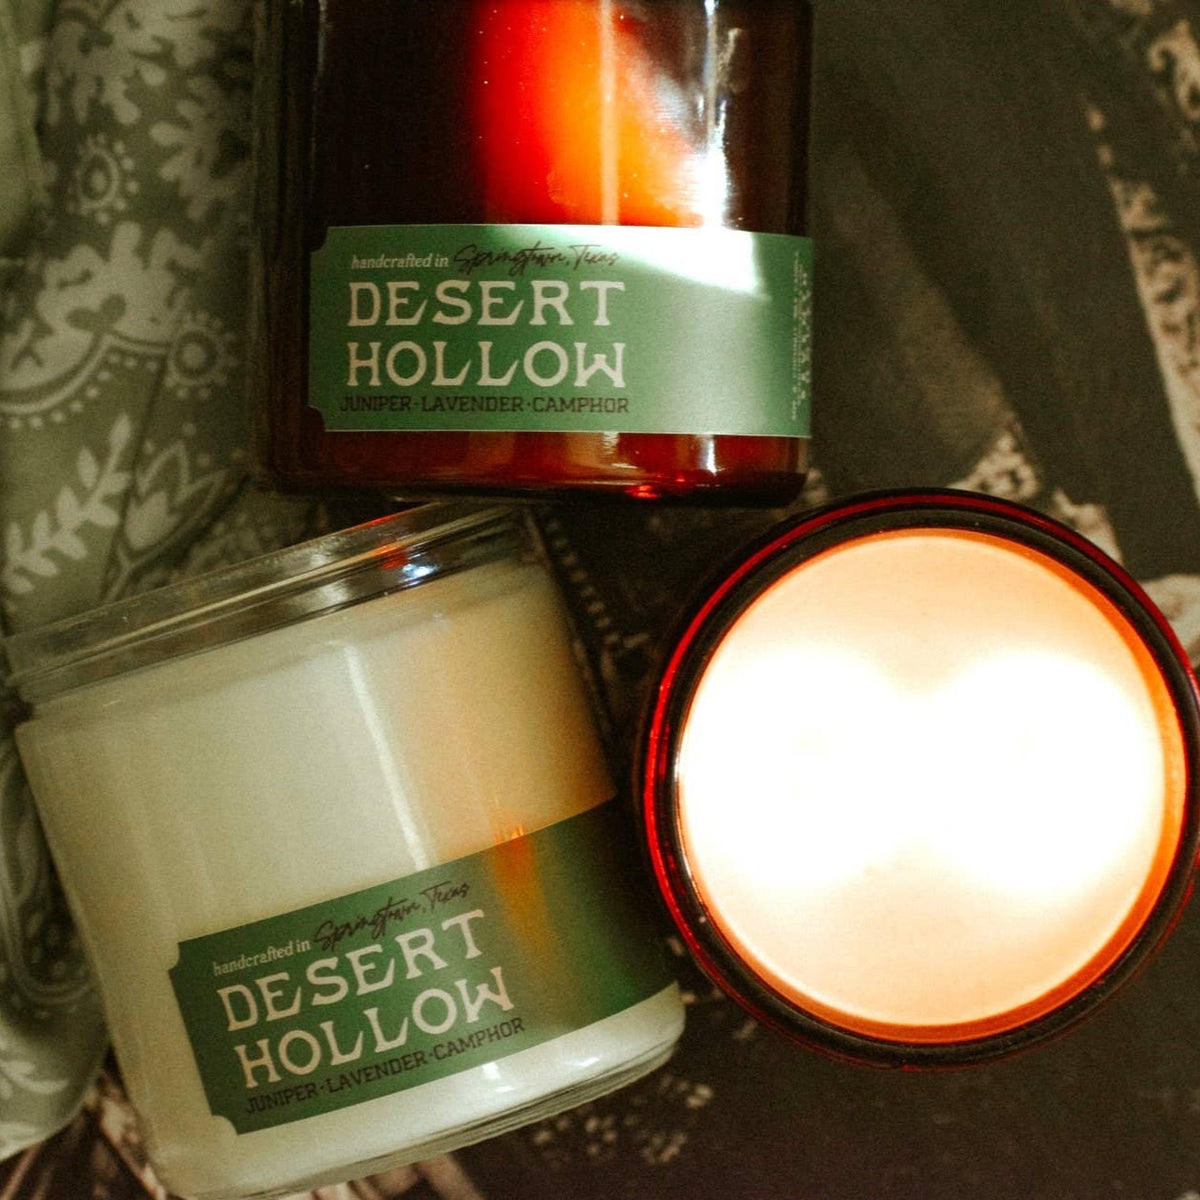 Desert Hollow Candle